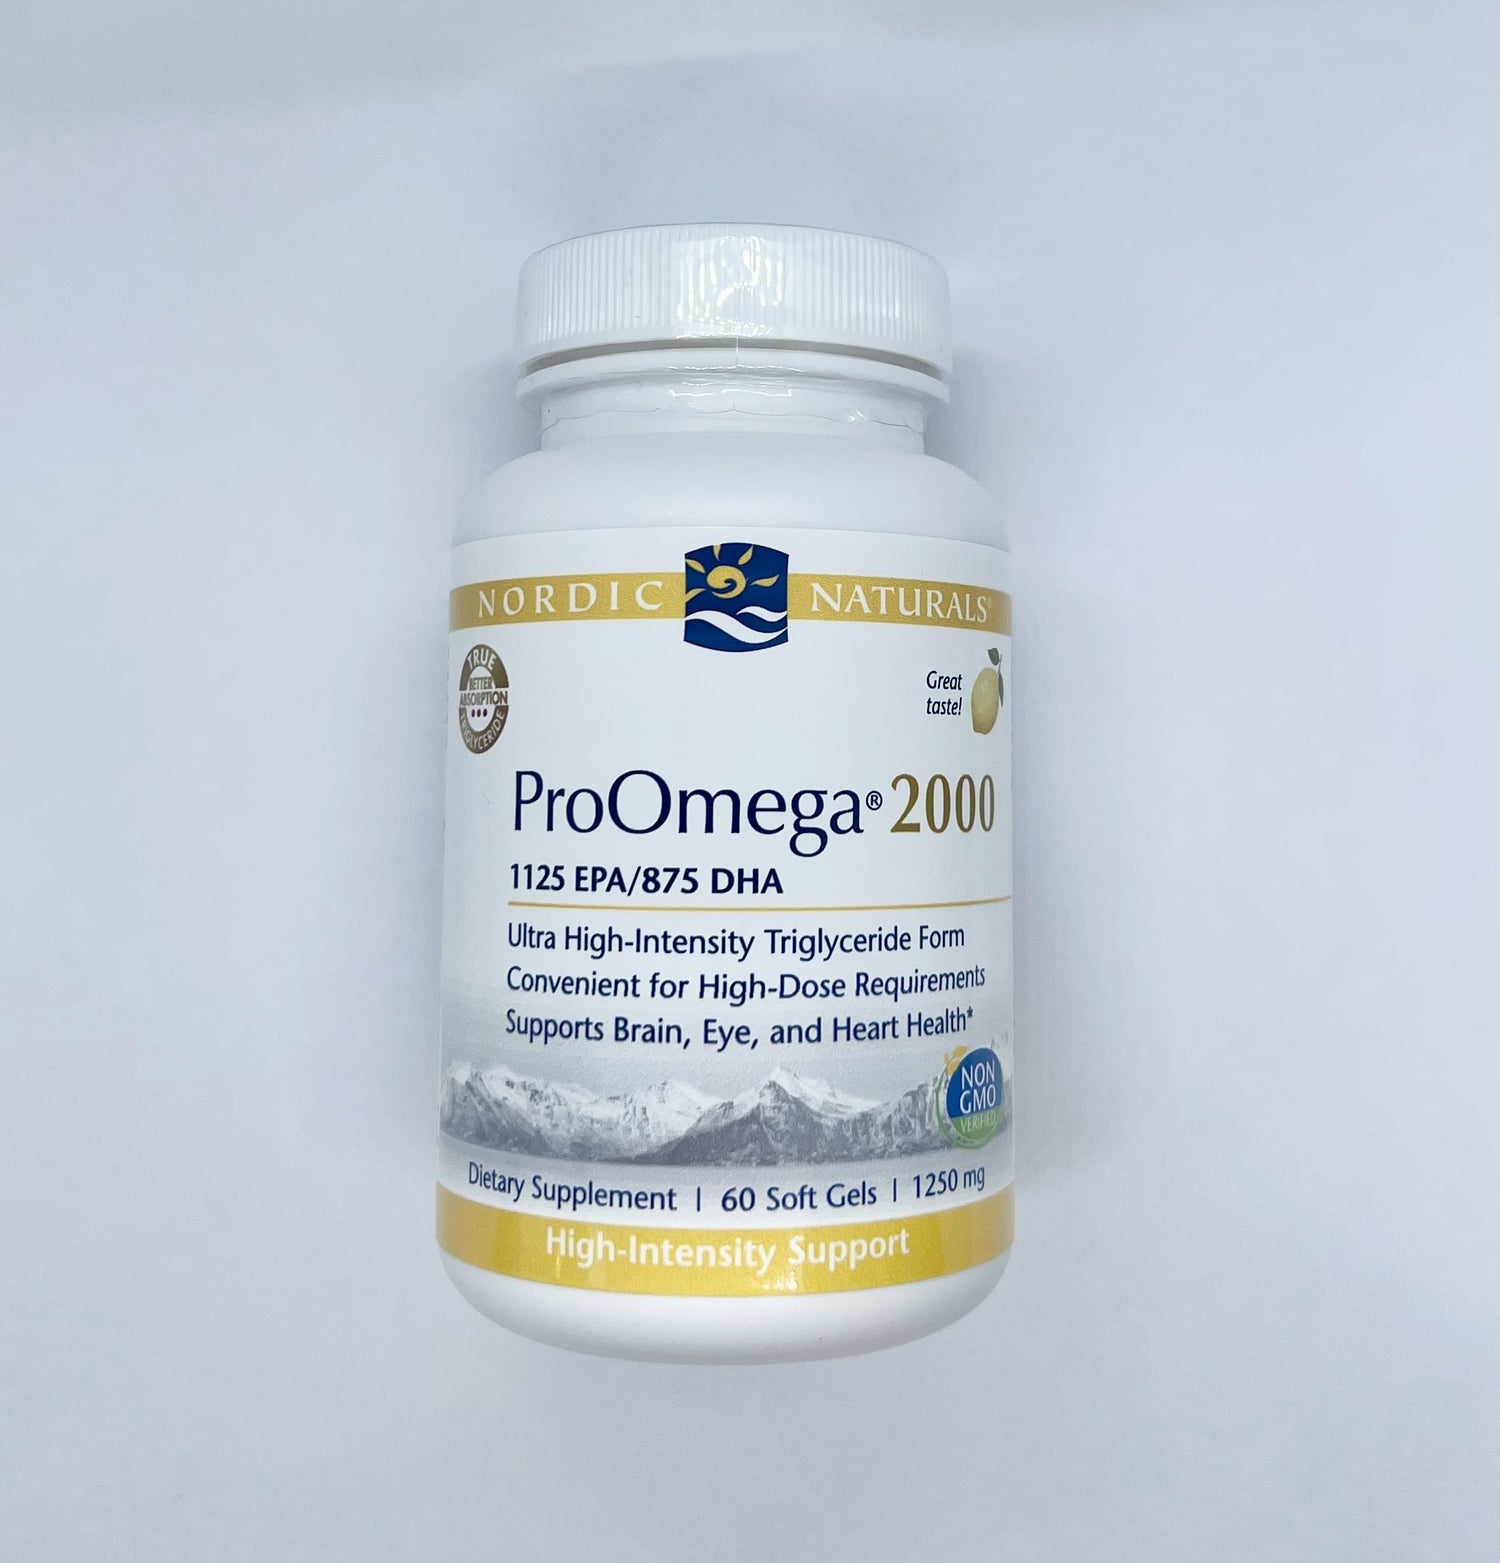 ProOmega 2000 Fish Oil Supplement Pills